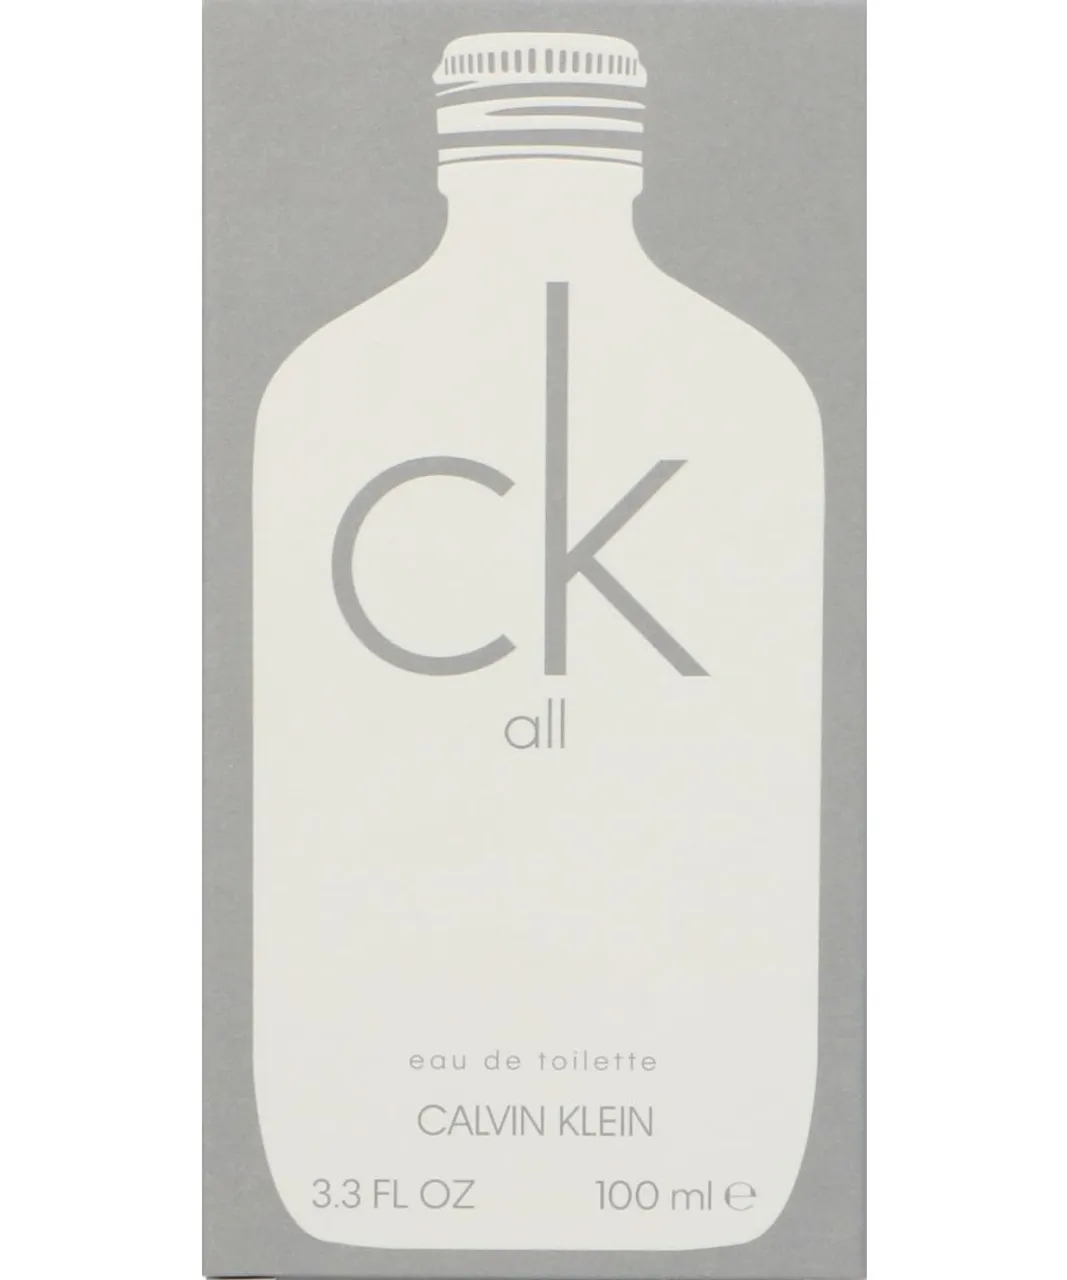 Calvin Klein CK All Eau de Toilette 100ml Spray Unisex - NA - One Size